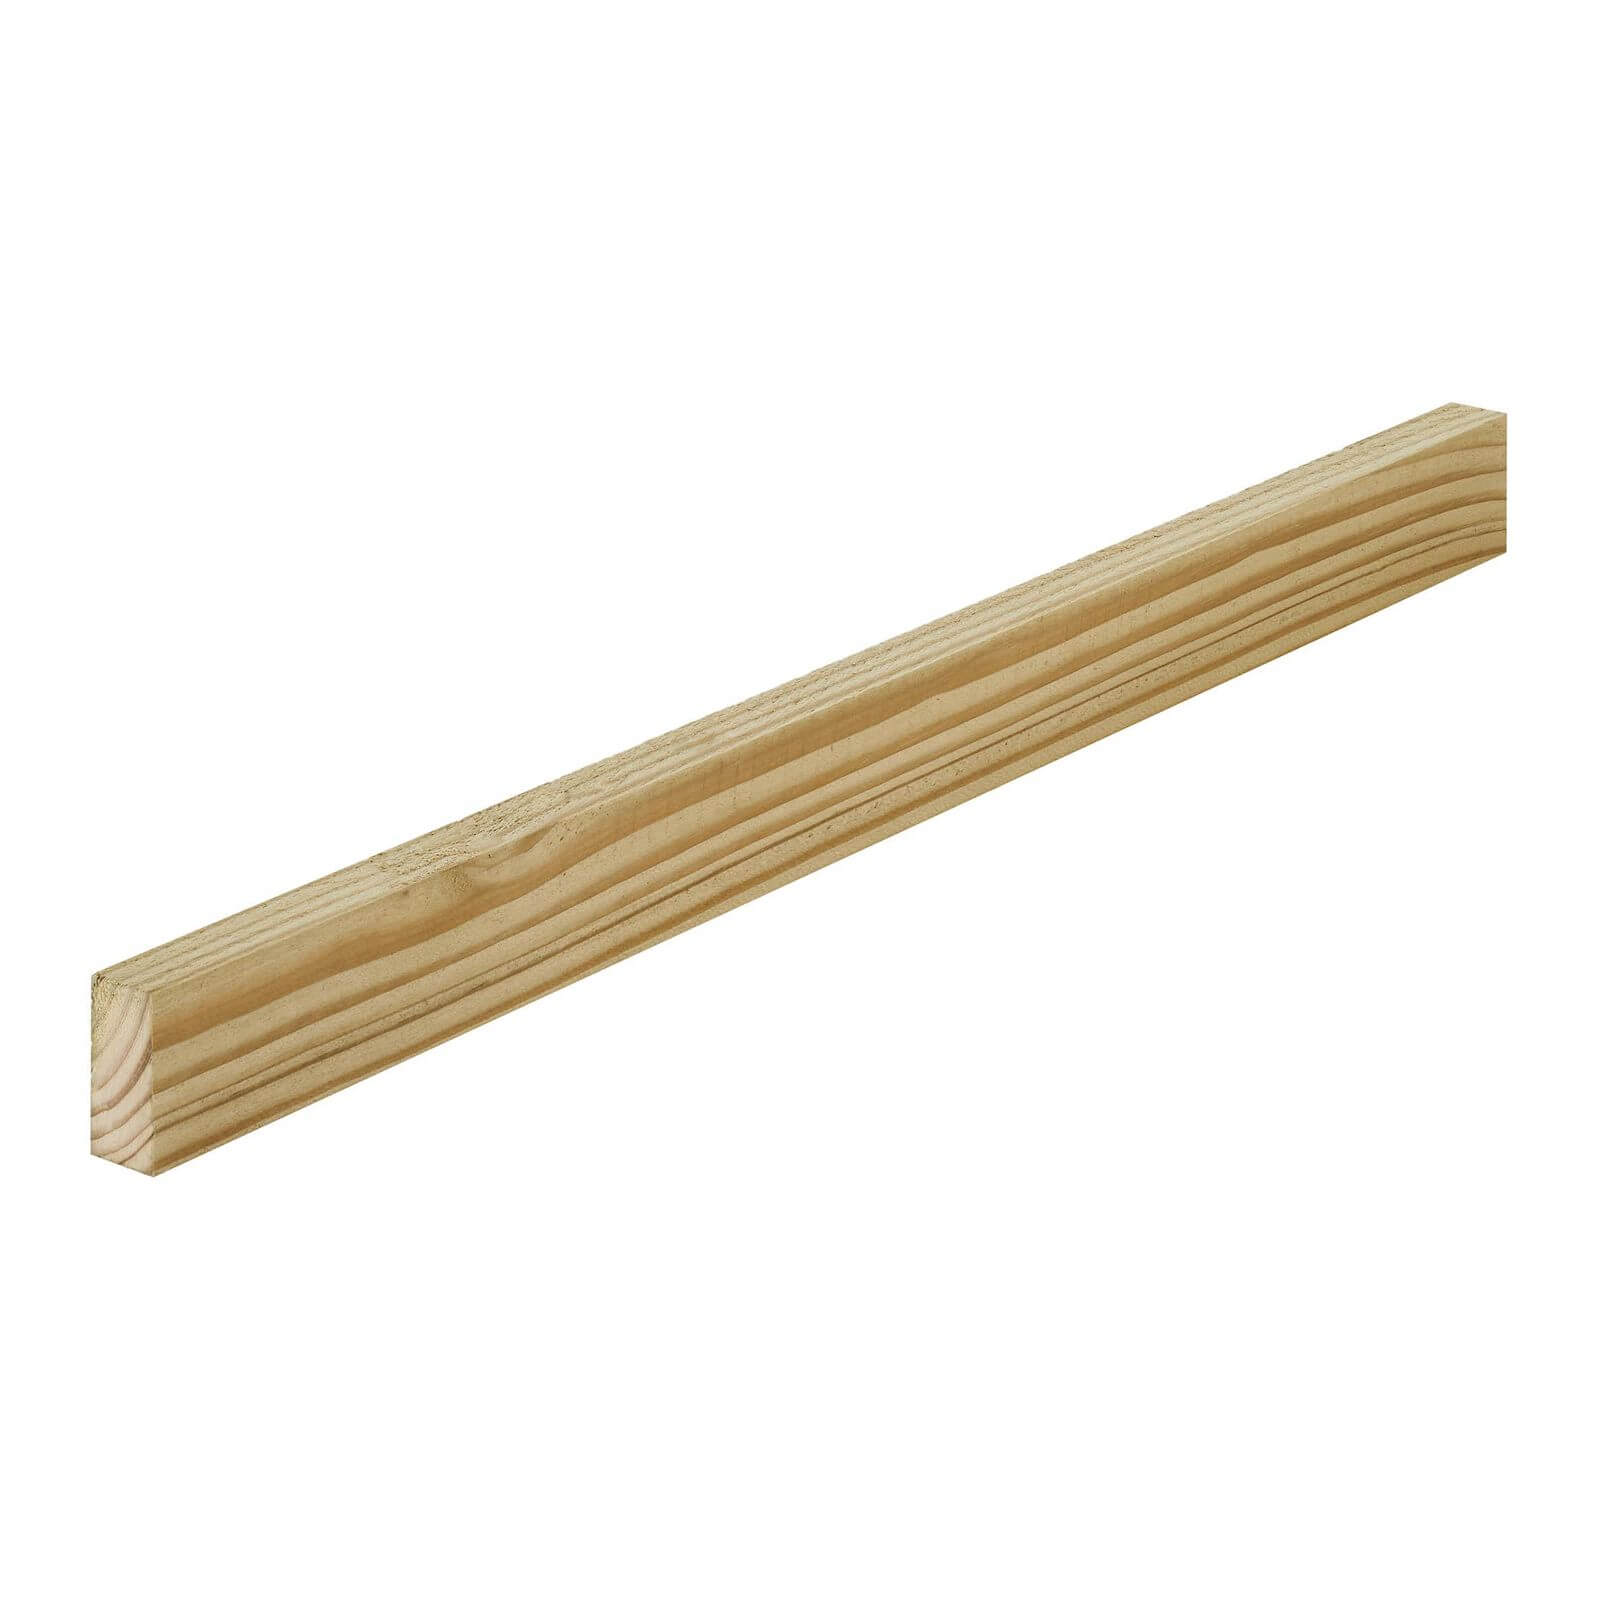 Metsa Sawn Treated Stick Softwood Timber 1.8m (19 x 34 x 1800mm)